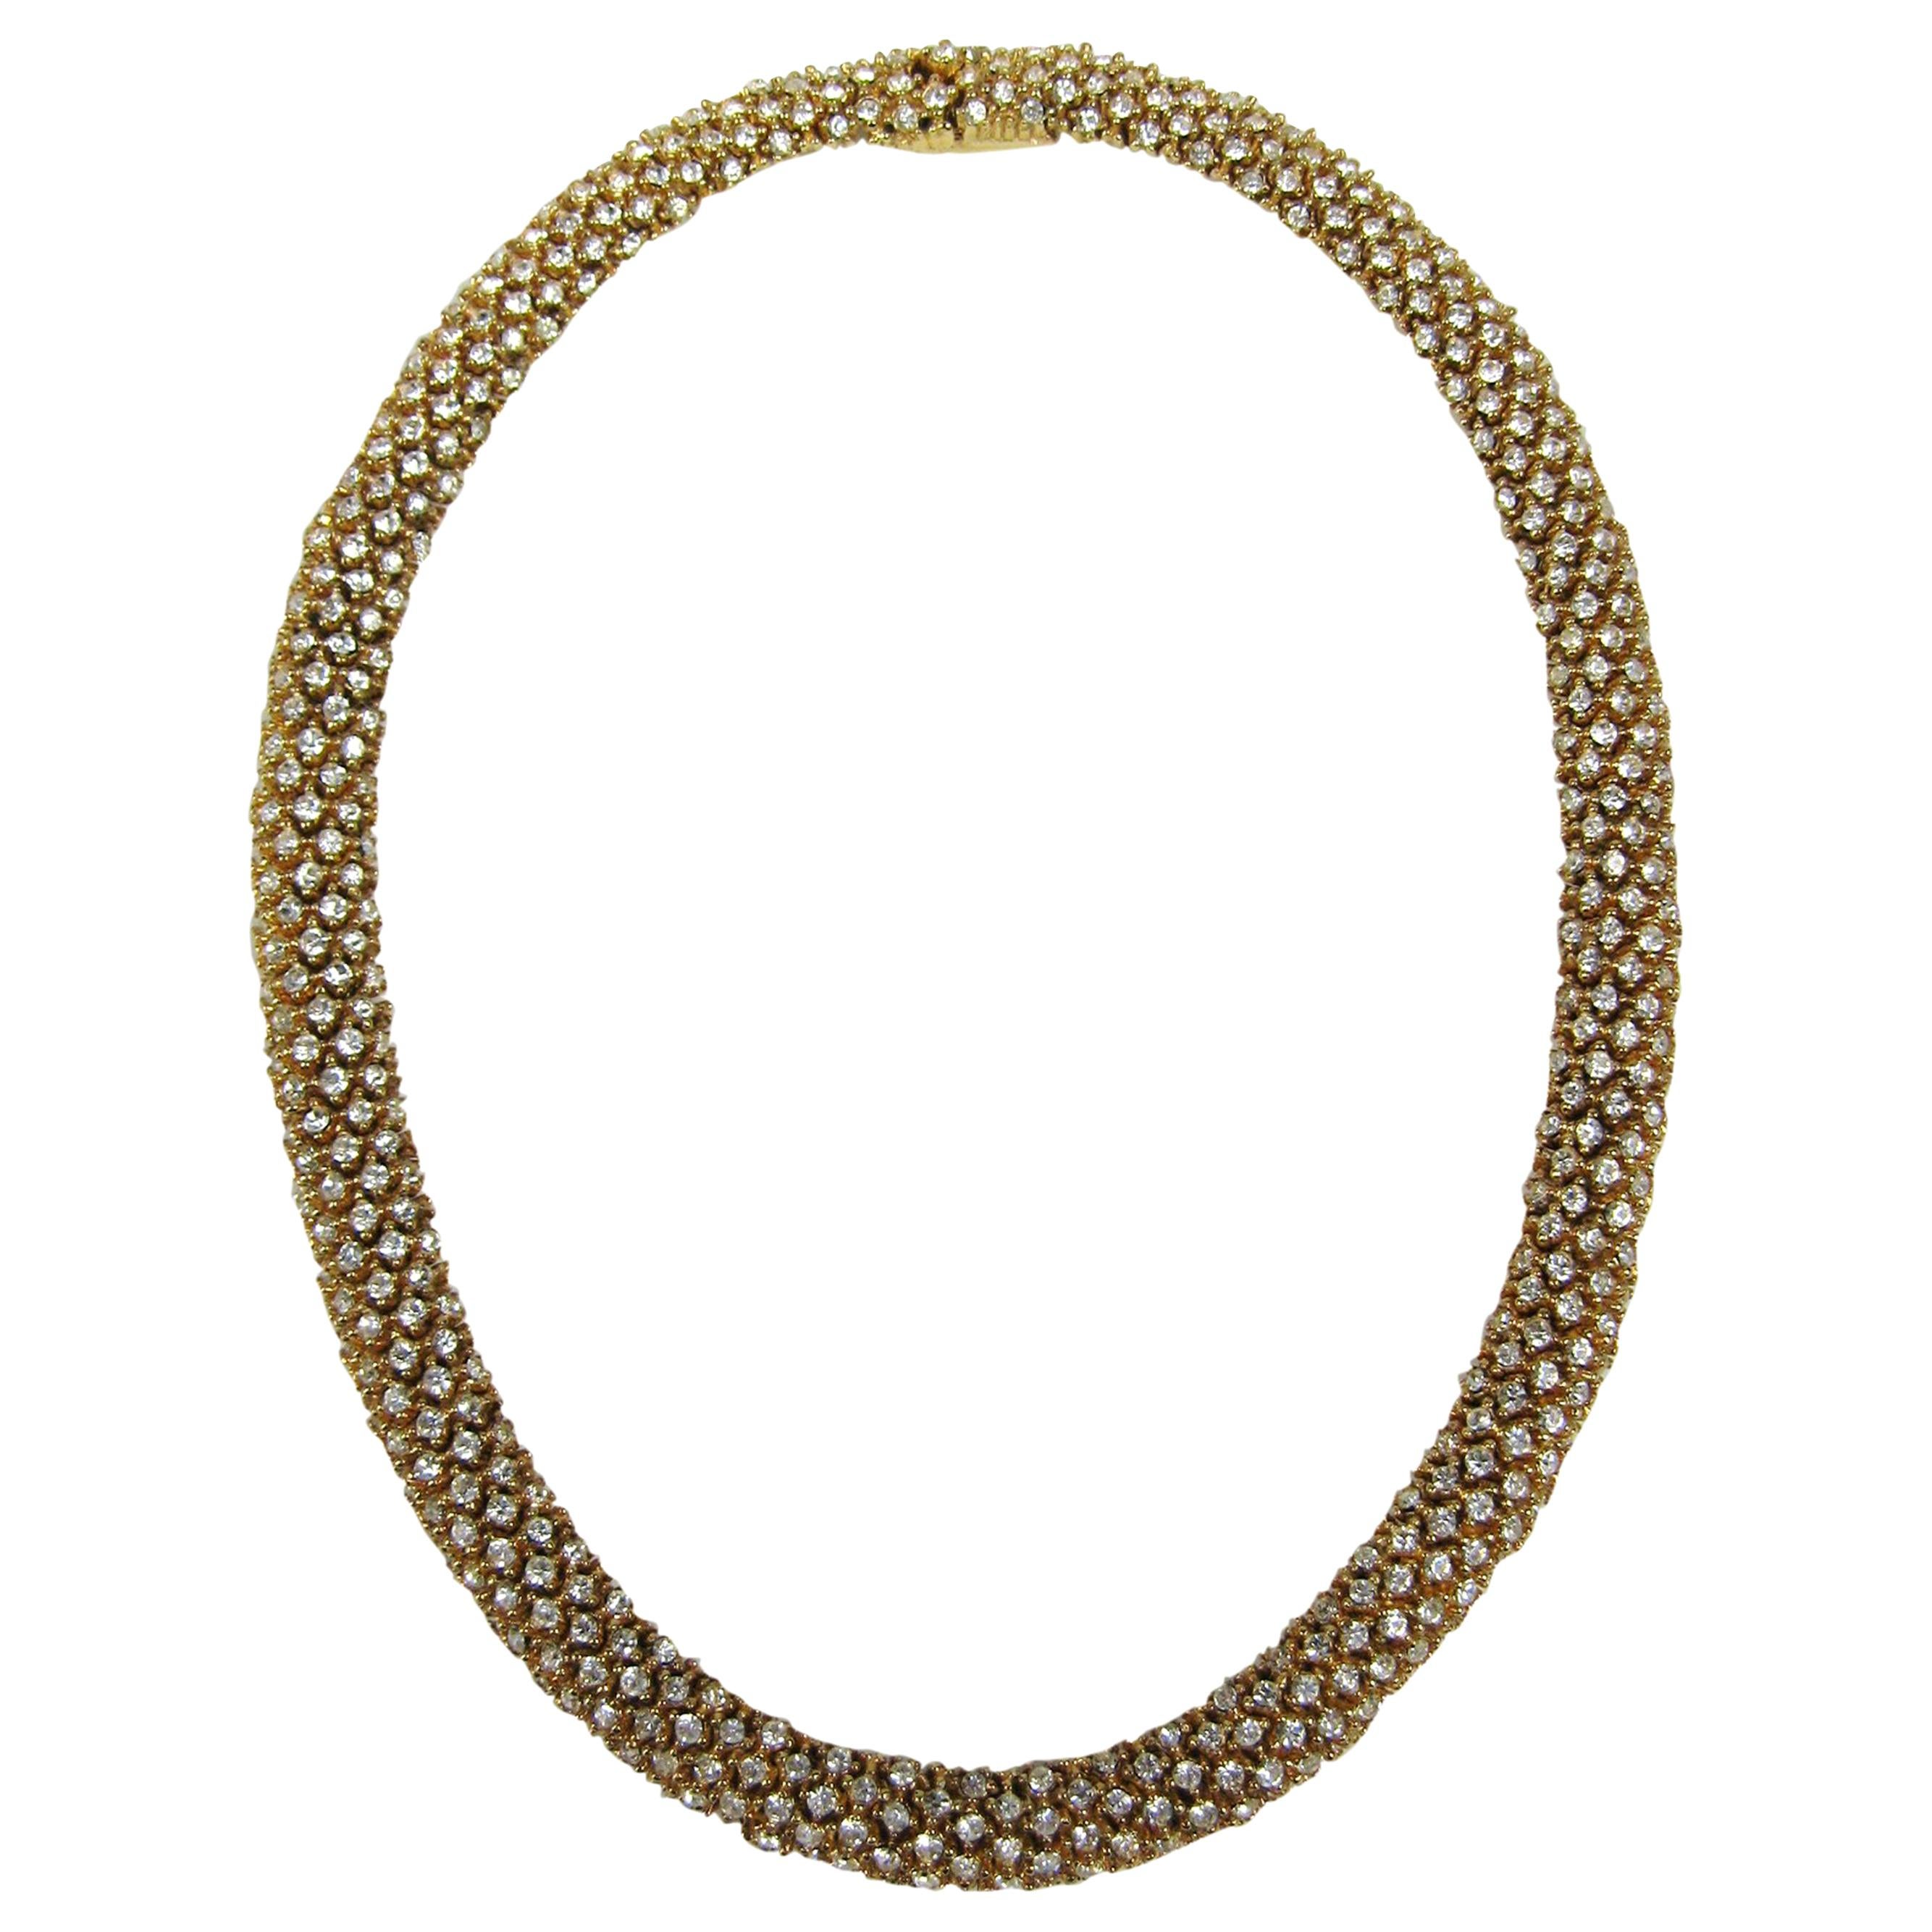  Ciner swarovski Crystal Choker Necklace Gold tone New, Never Worn 1980s For Sale